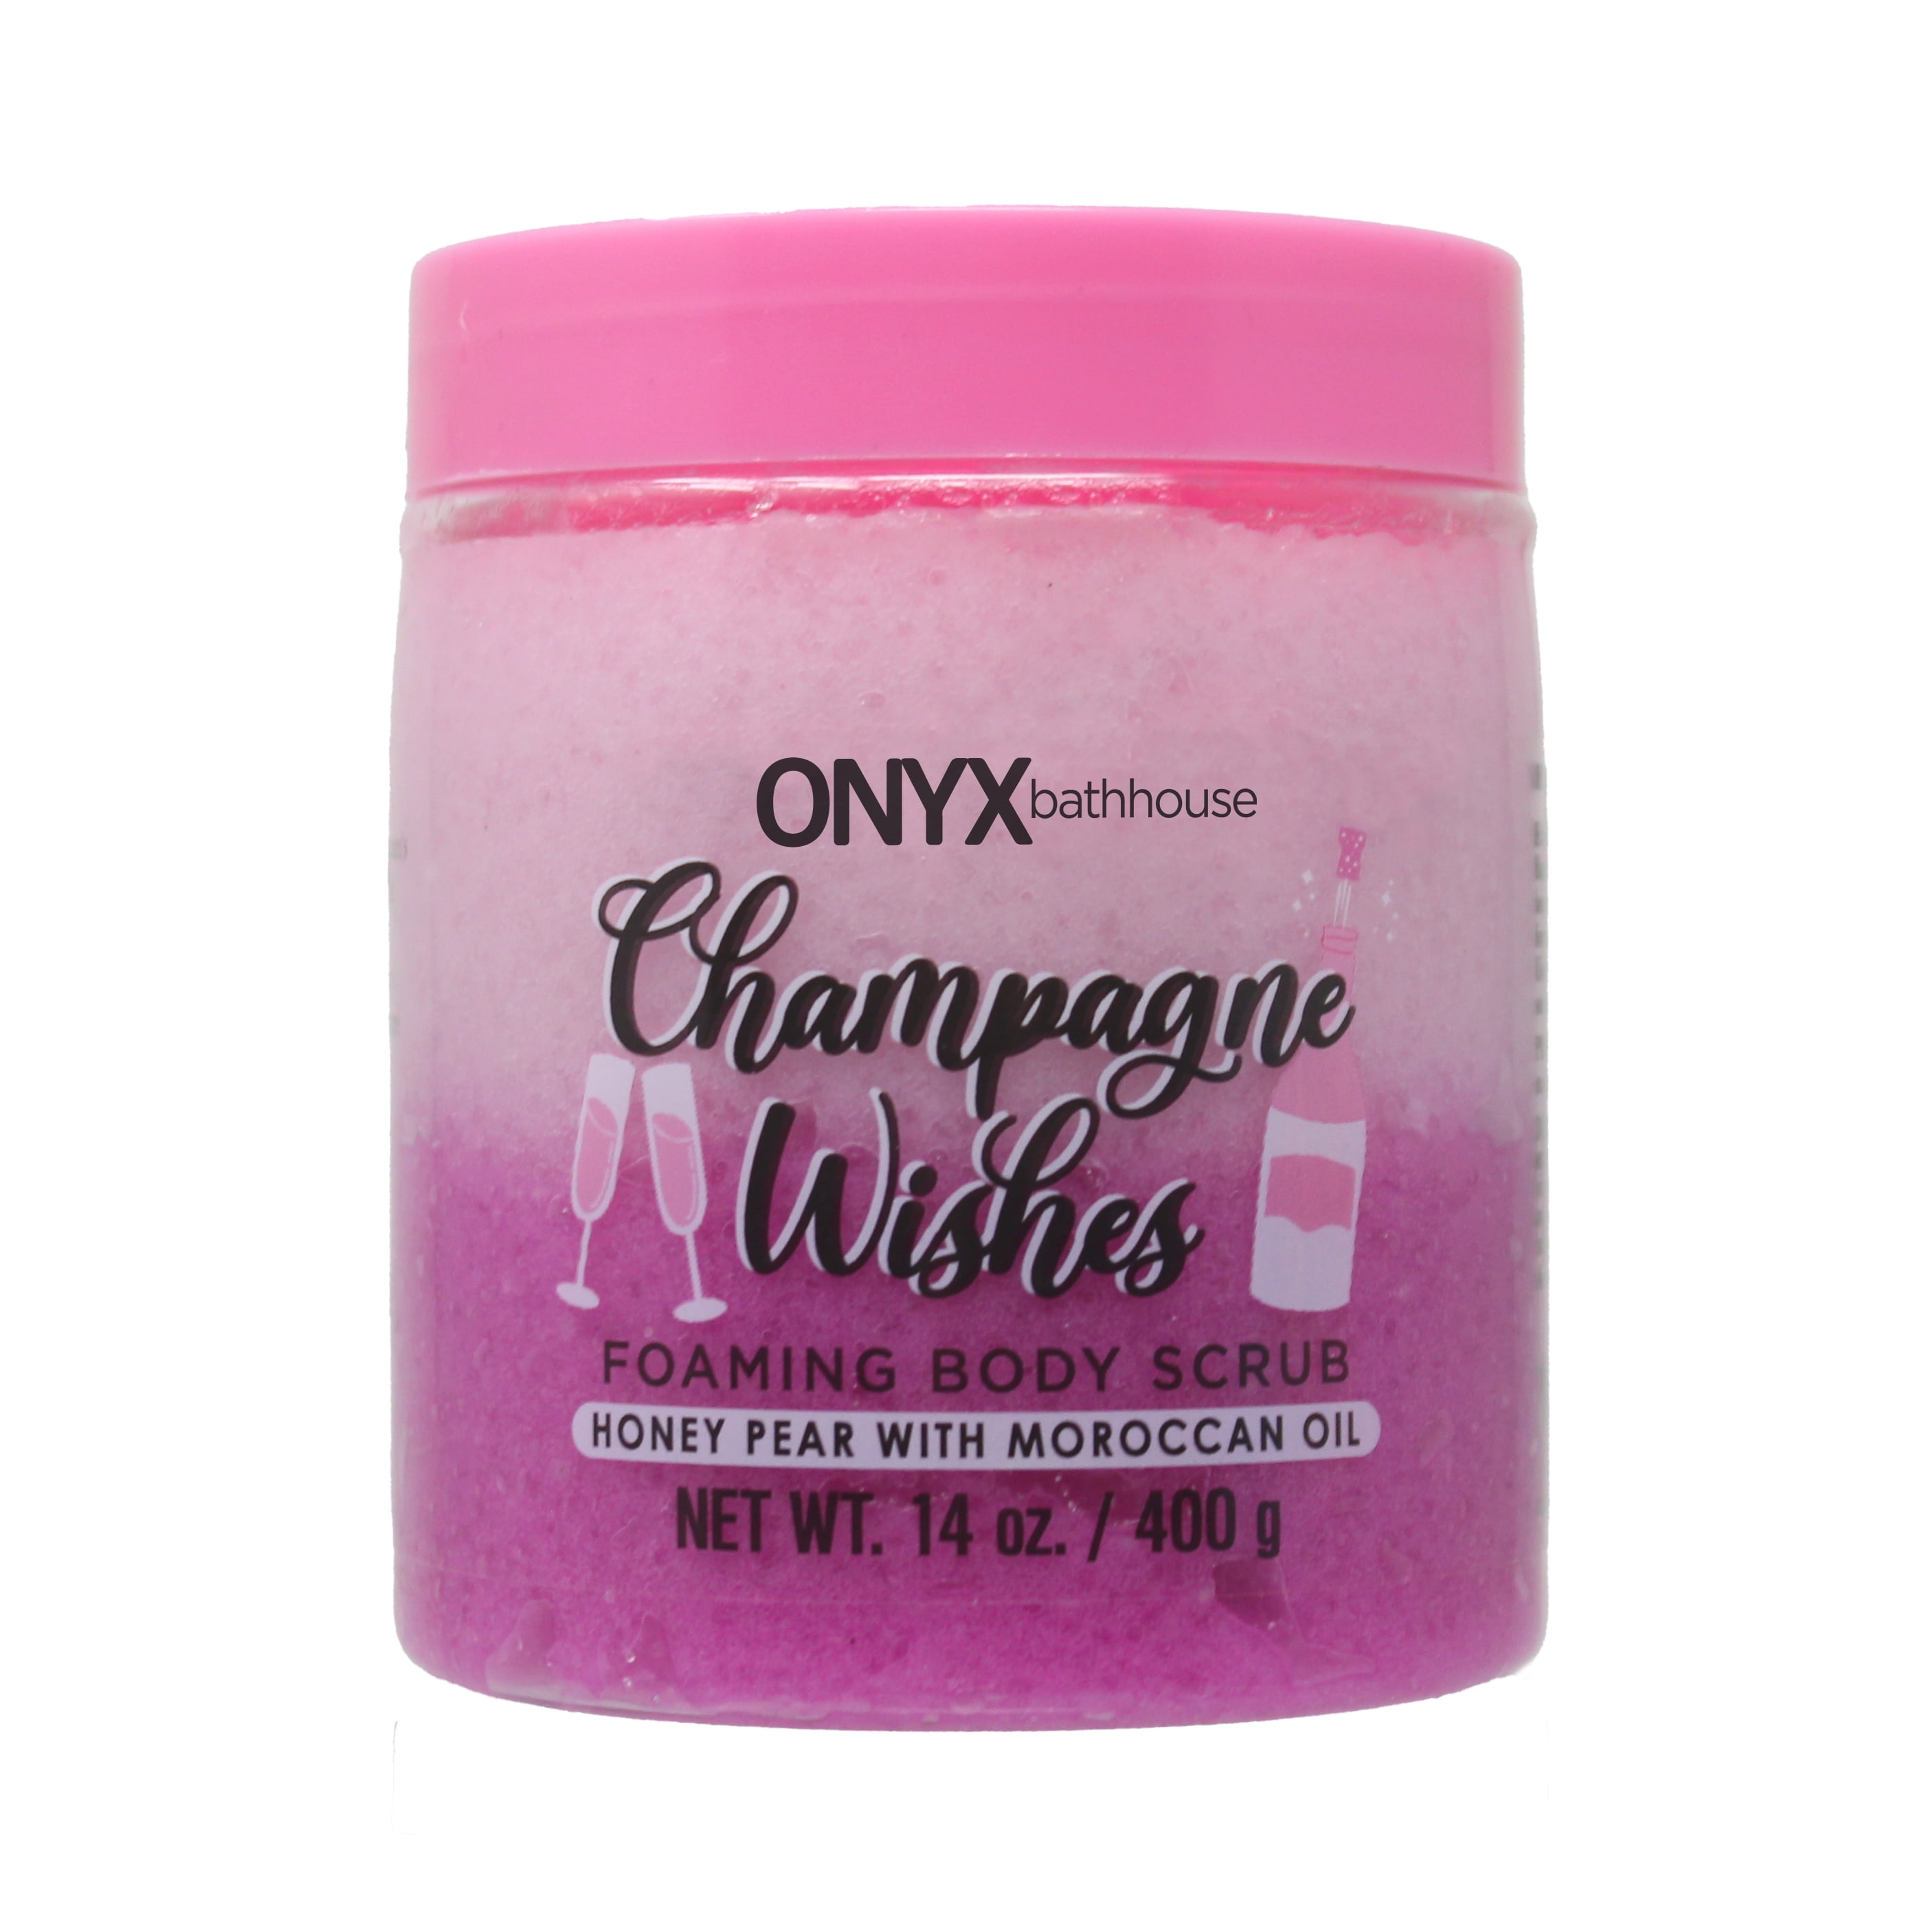 Onyx Bathhouse Champagne Wishes 12 oz Foaming Body Scrub, Honey and Pear Scent